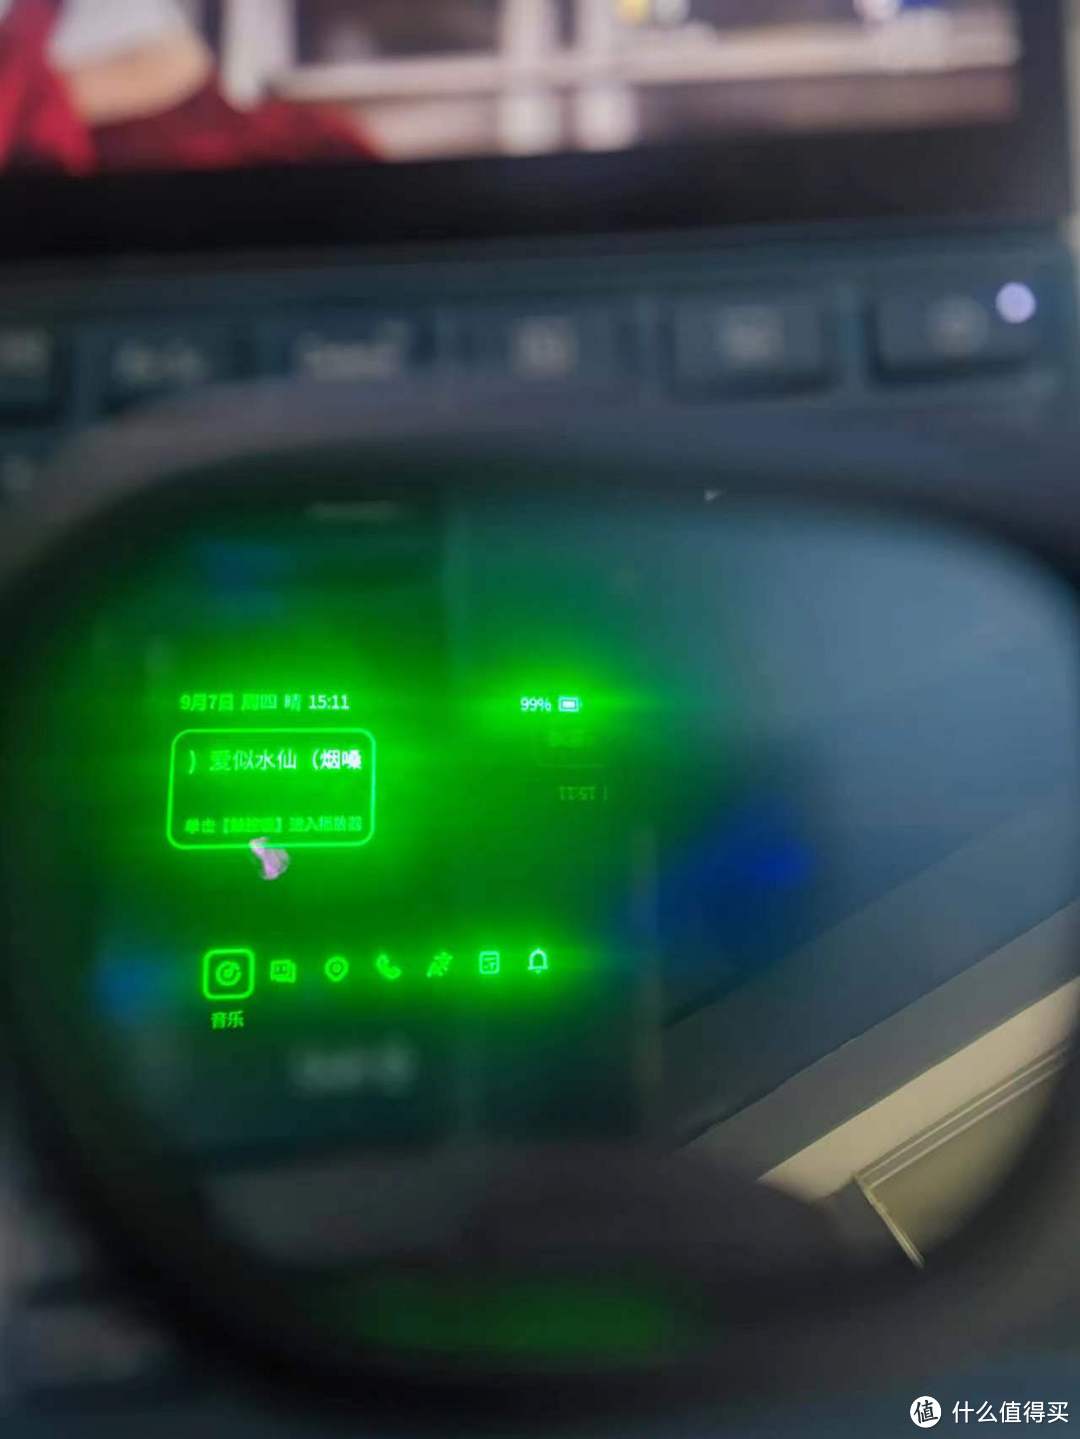 INMO Go AR 眼镜实测：低算力设备的新突破